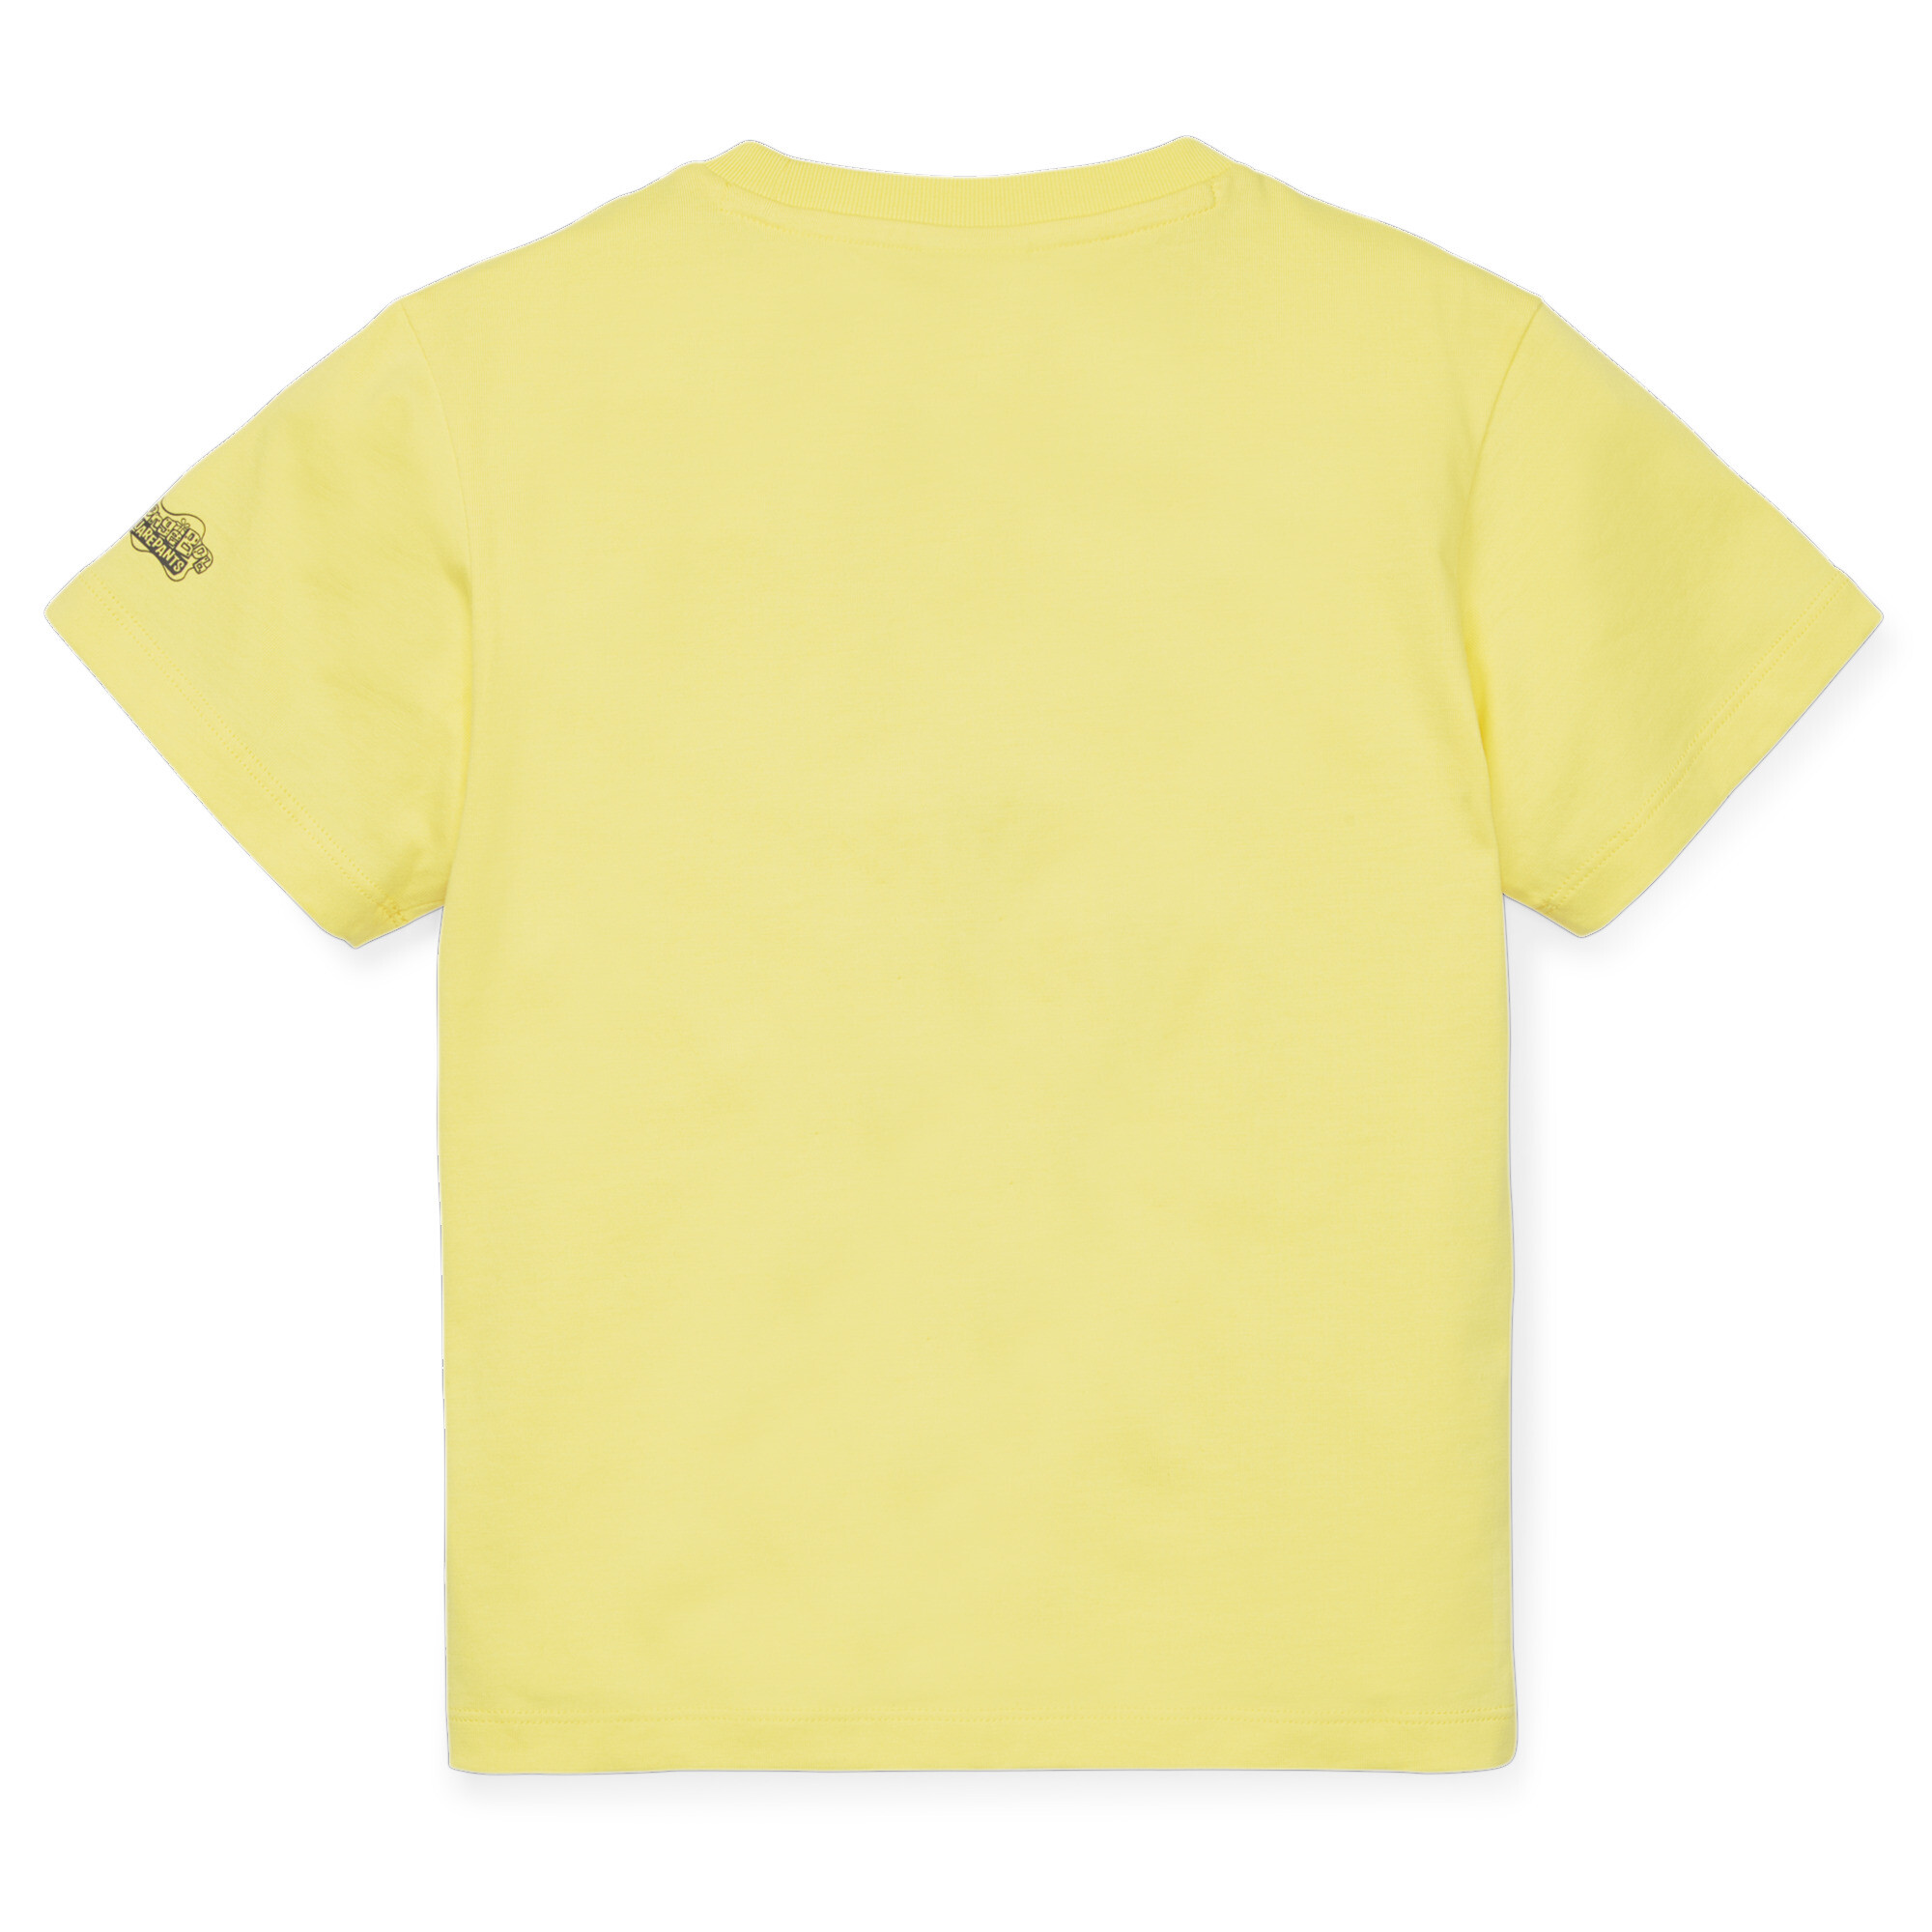 PUMA X SPONGEBOB T-Shirt Kids In Yellow, Size 11-12 Youth